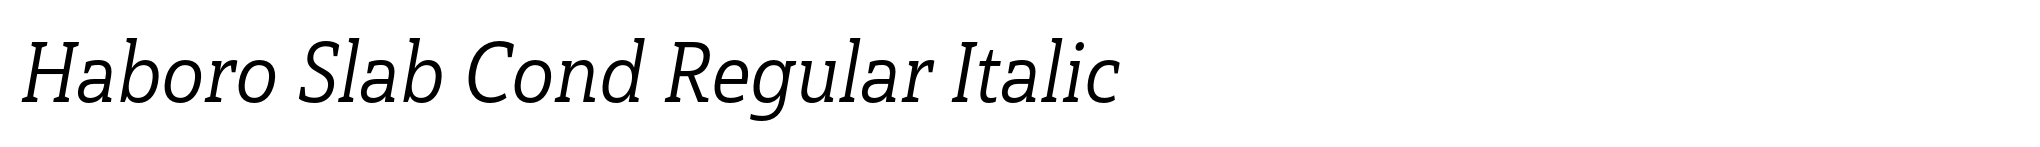 Haboro Slab Cond Regular Italic image